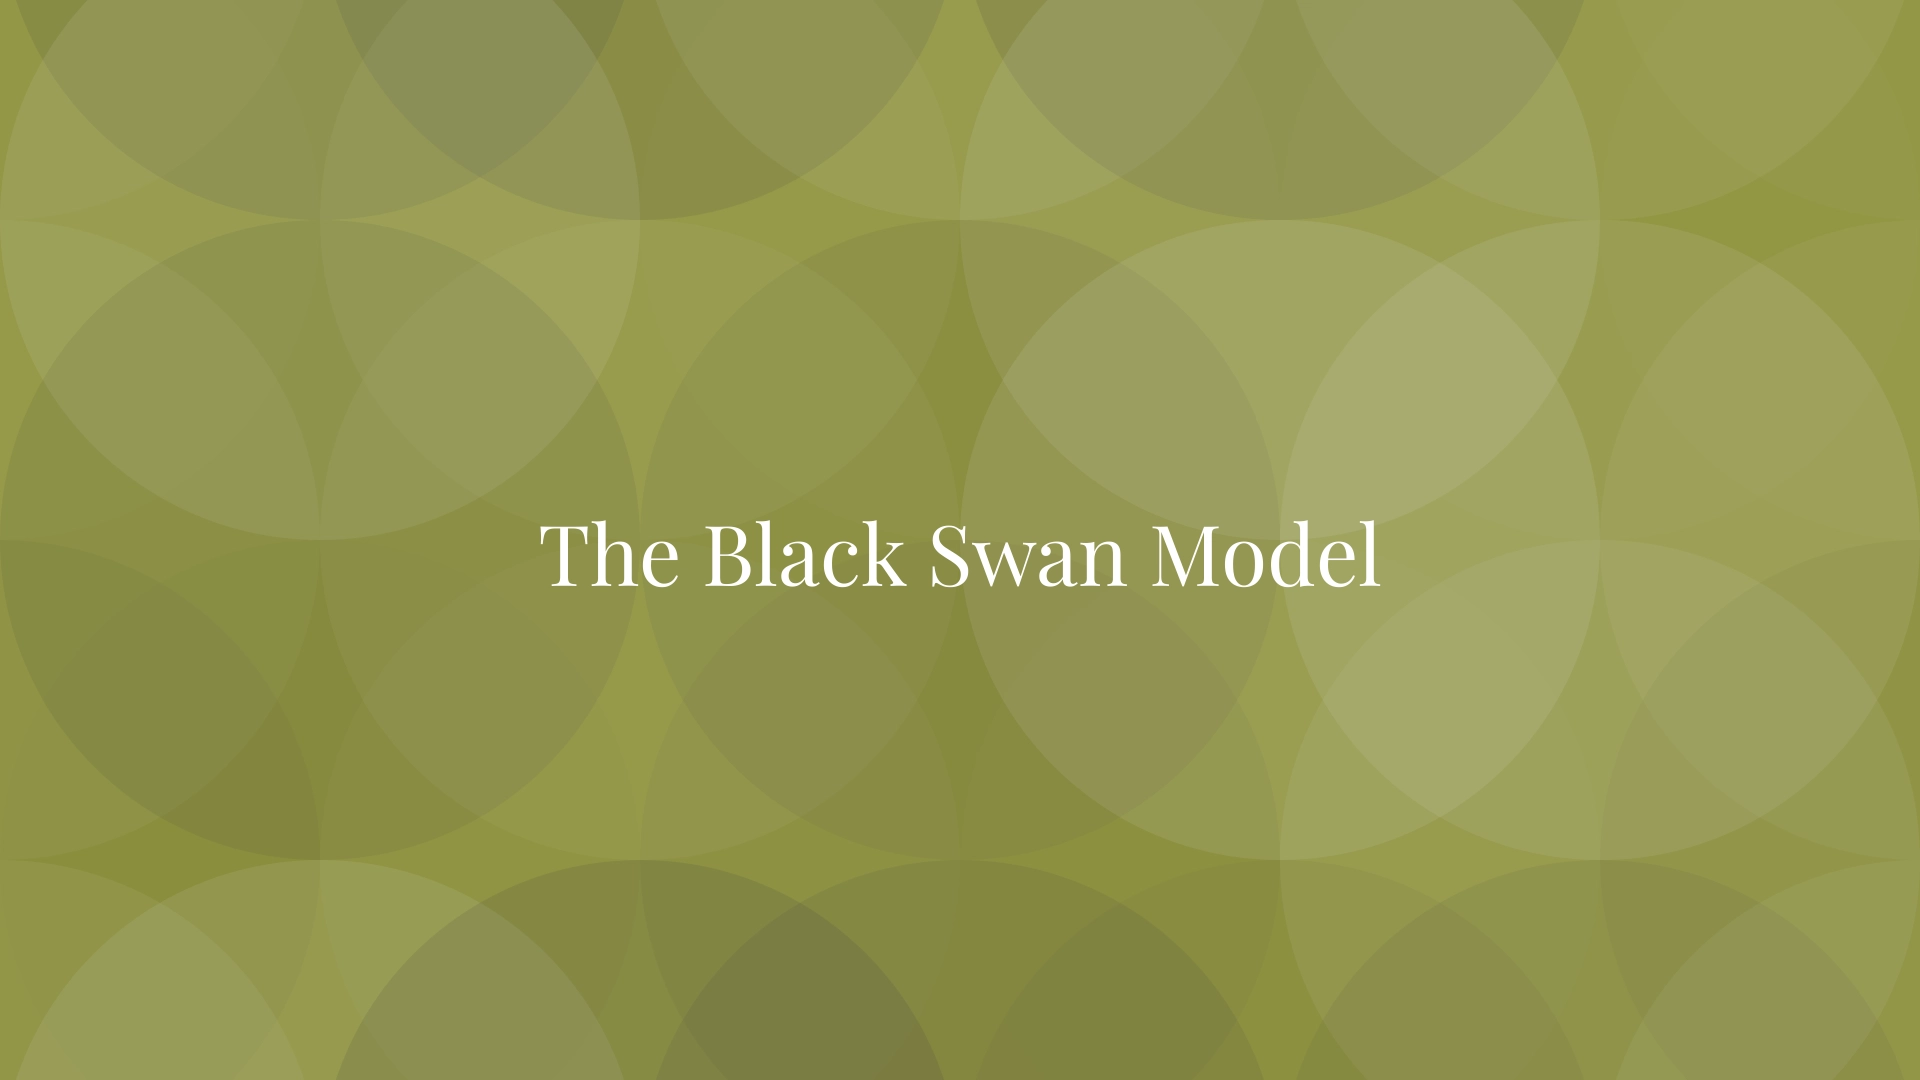 The Black Swan Model